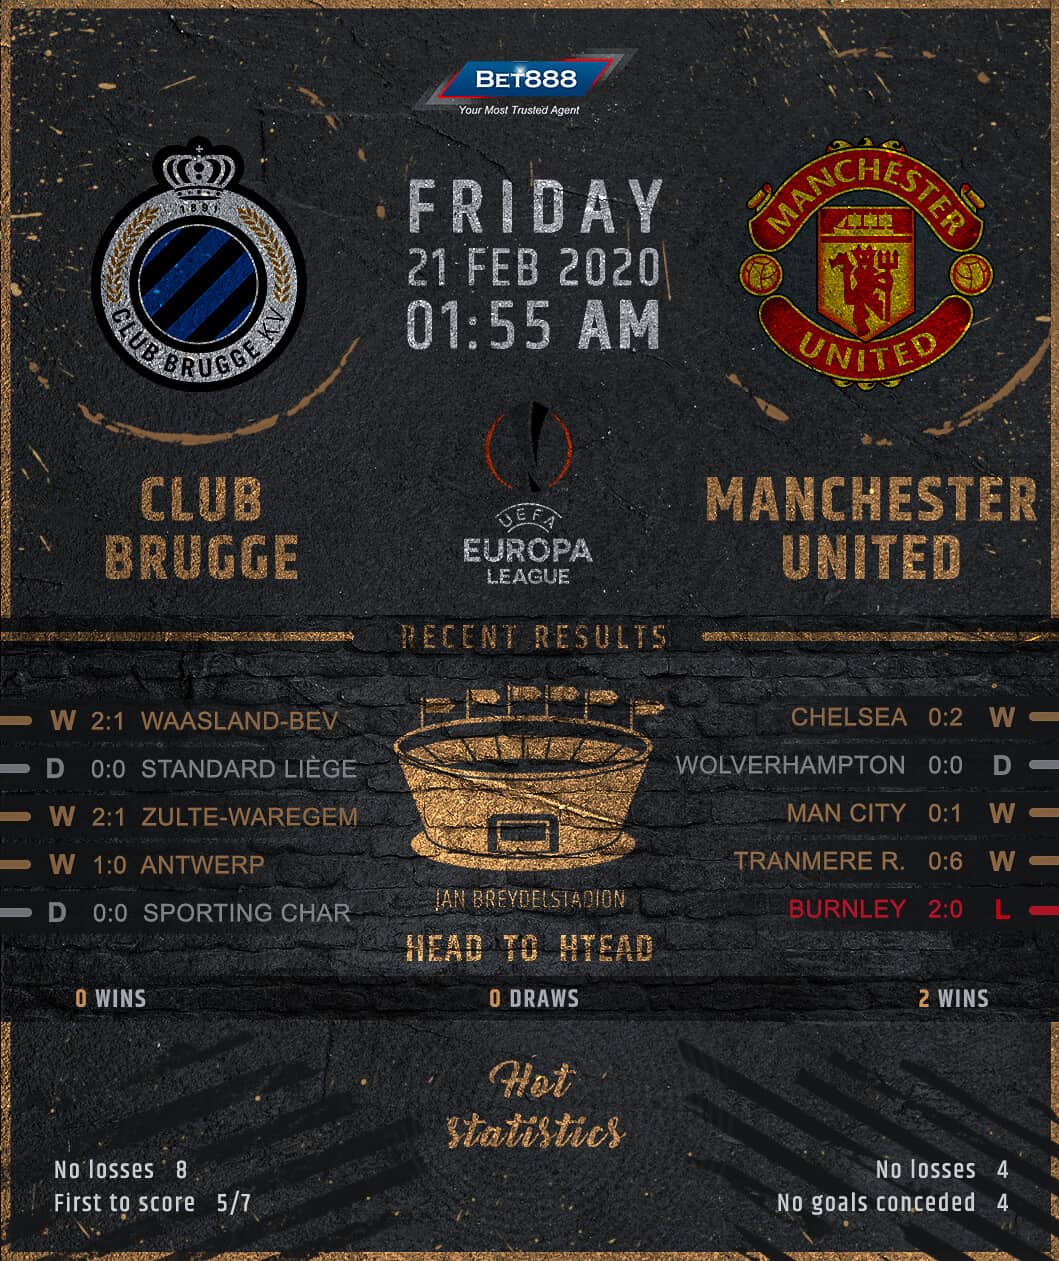 Club Brugge vs Manchester United﻿ 21/02/20